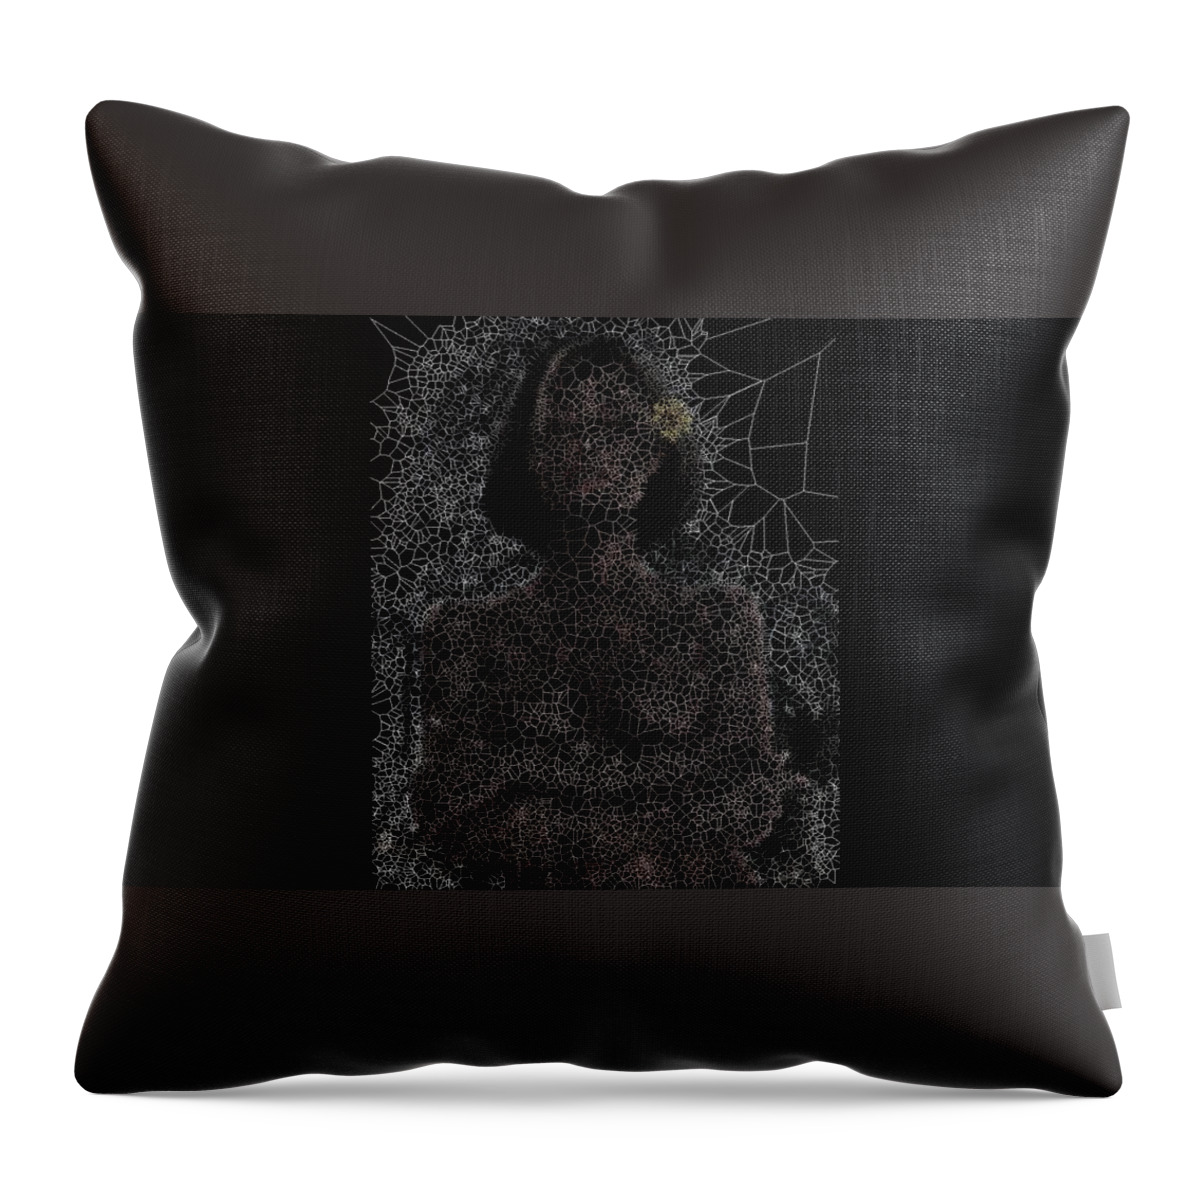 Vorotrans Throw Pillow featuring the digital art Half Alien by Stephane Poirier